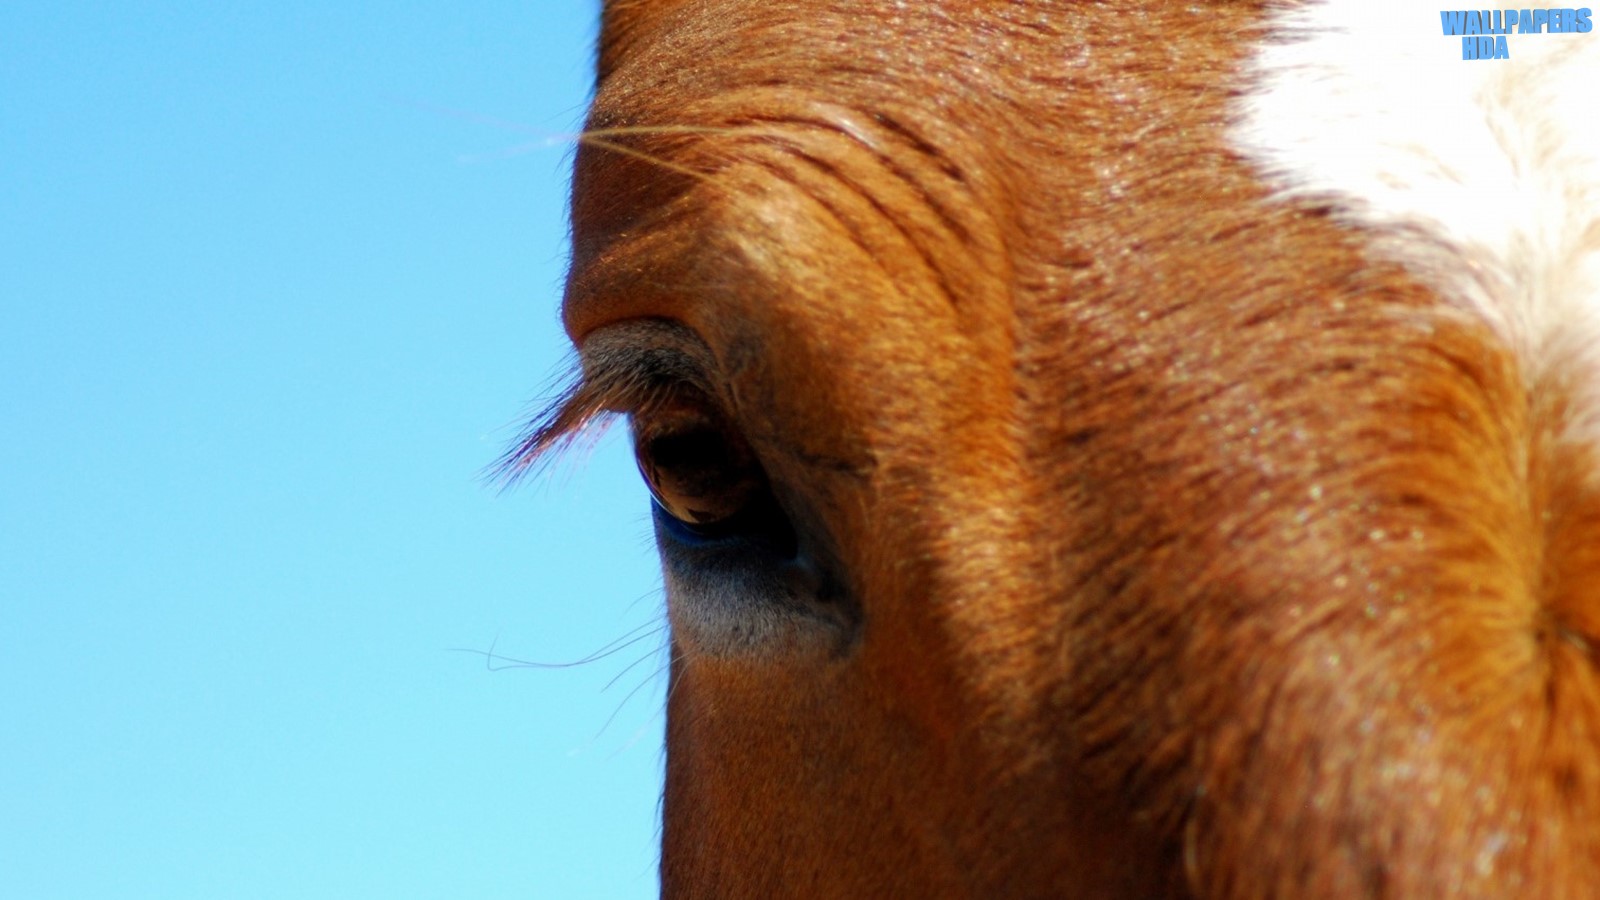 Horse eye wallpaper 1600x900